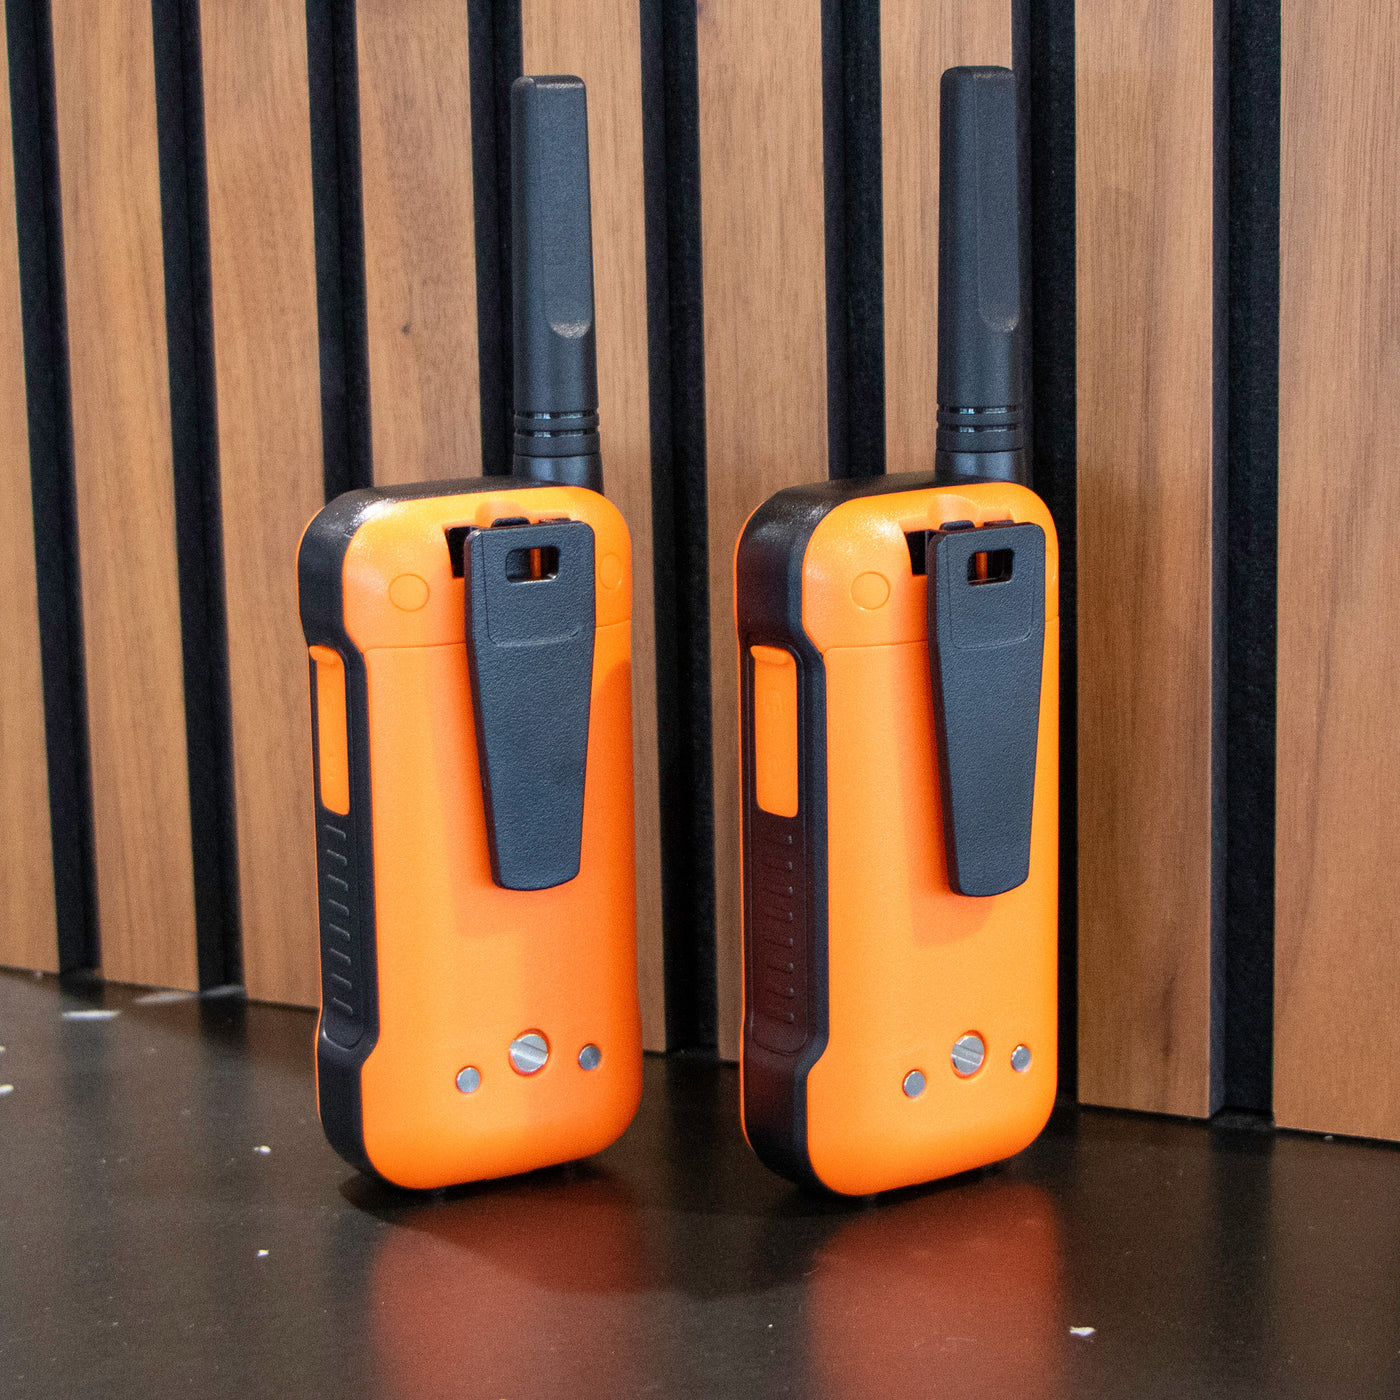 Alecto FR300OE - Ruggedized Two-Way radio, range up to 10 kilometers, orange/black